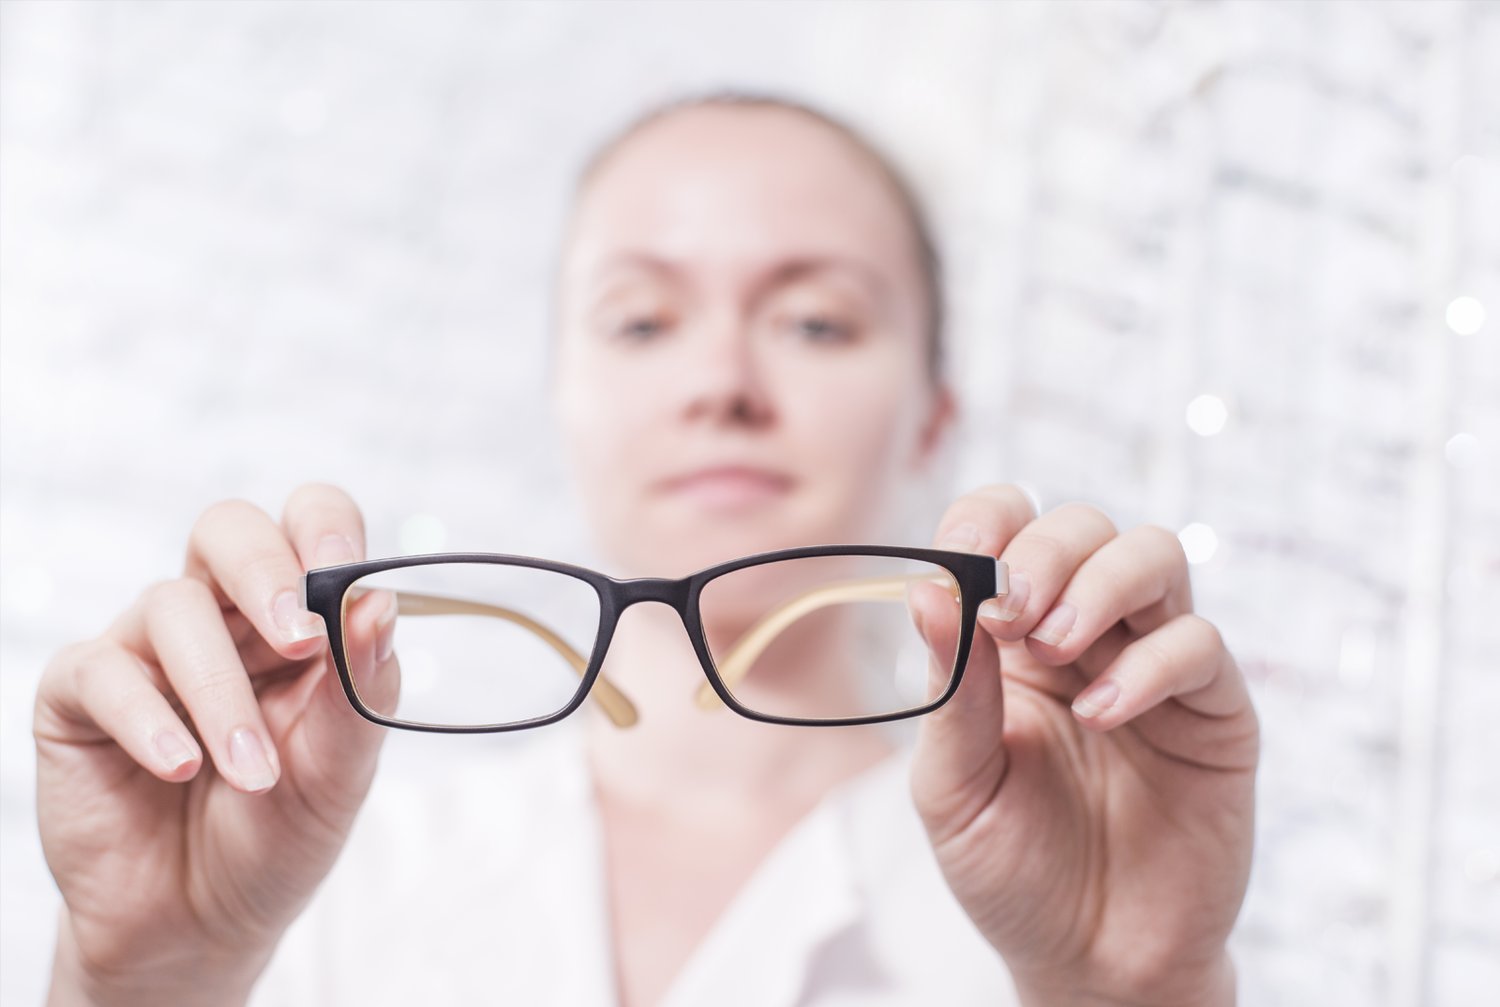 What is myopia?